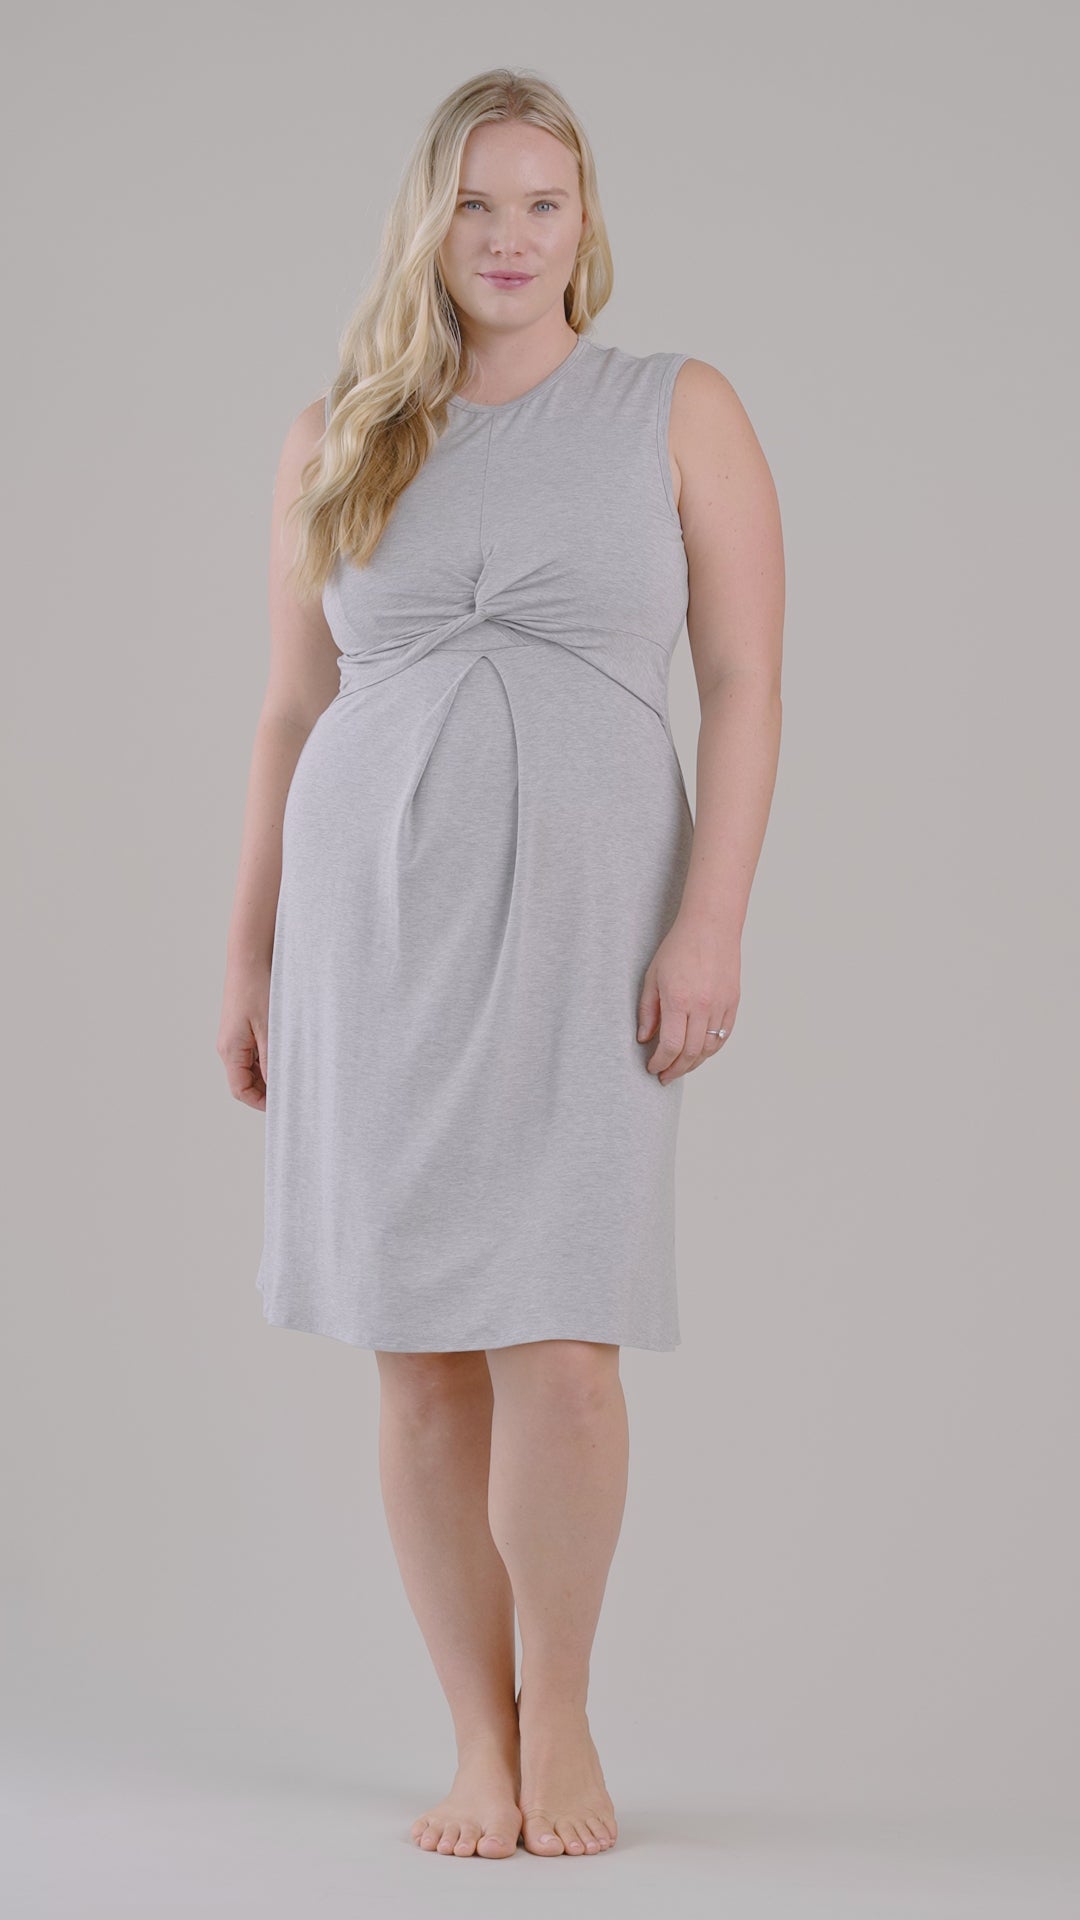 simple wishes debra nursing dress in light heather grey on blonde model shown in video